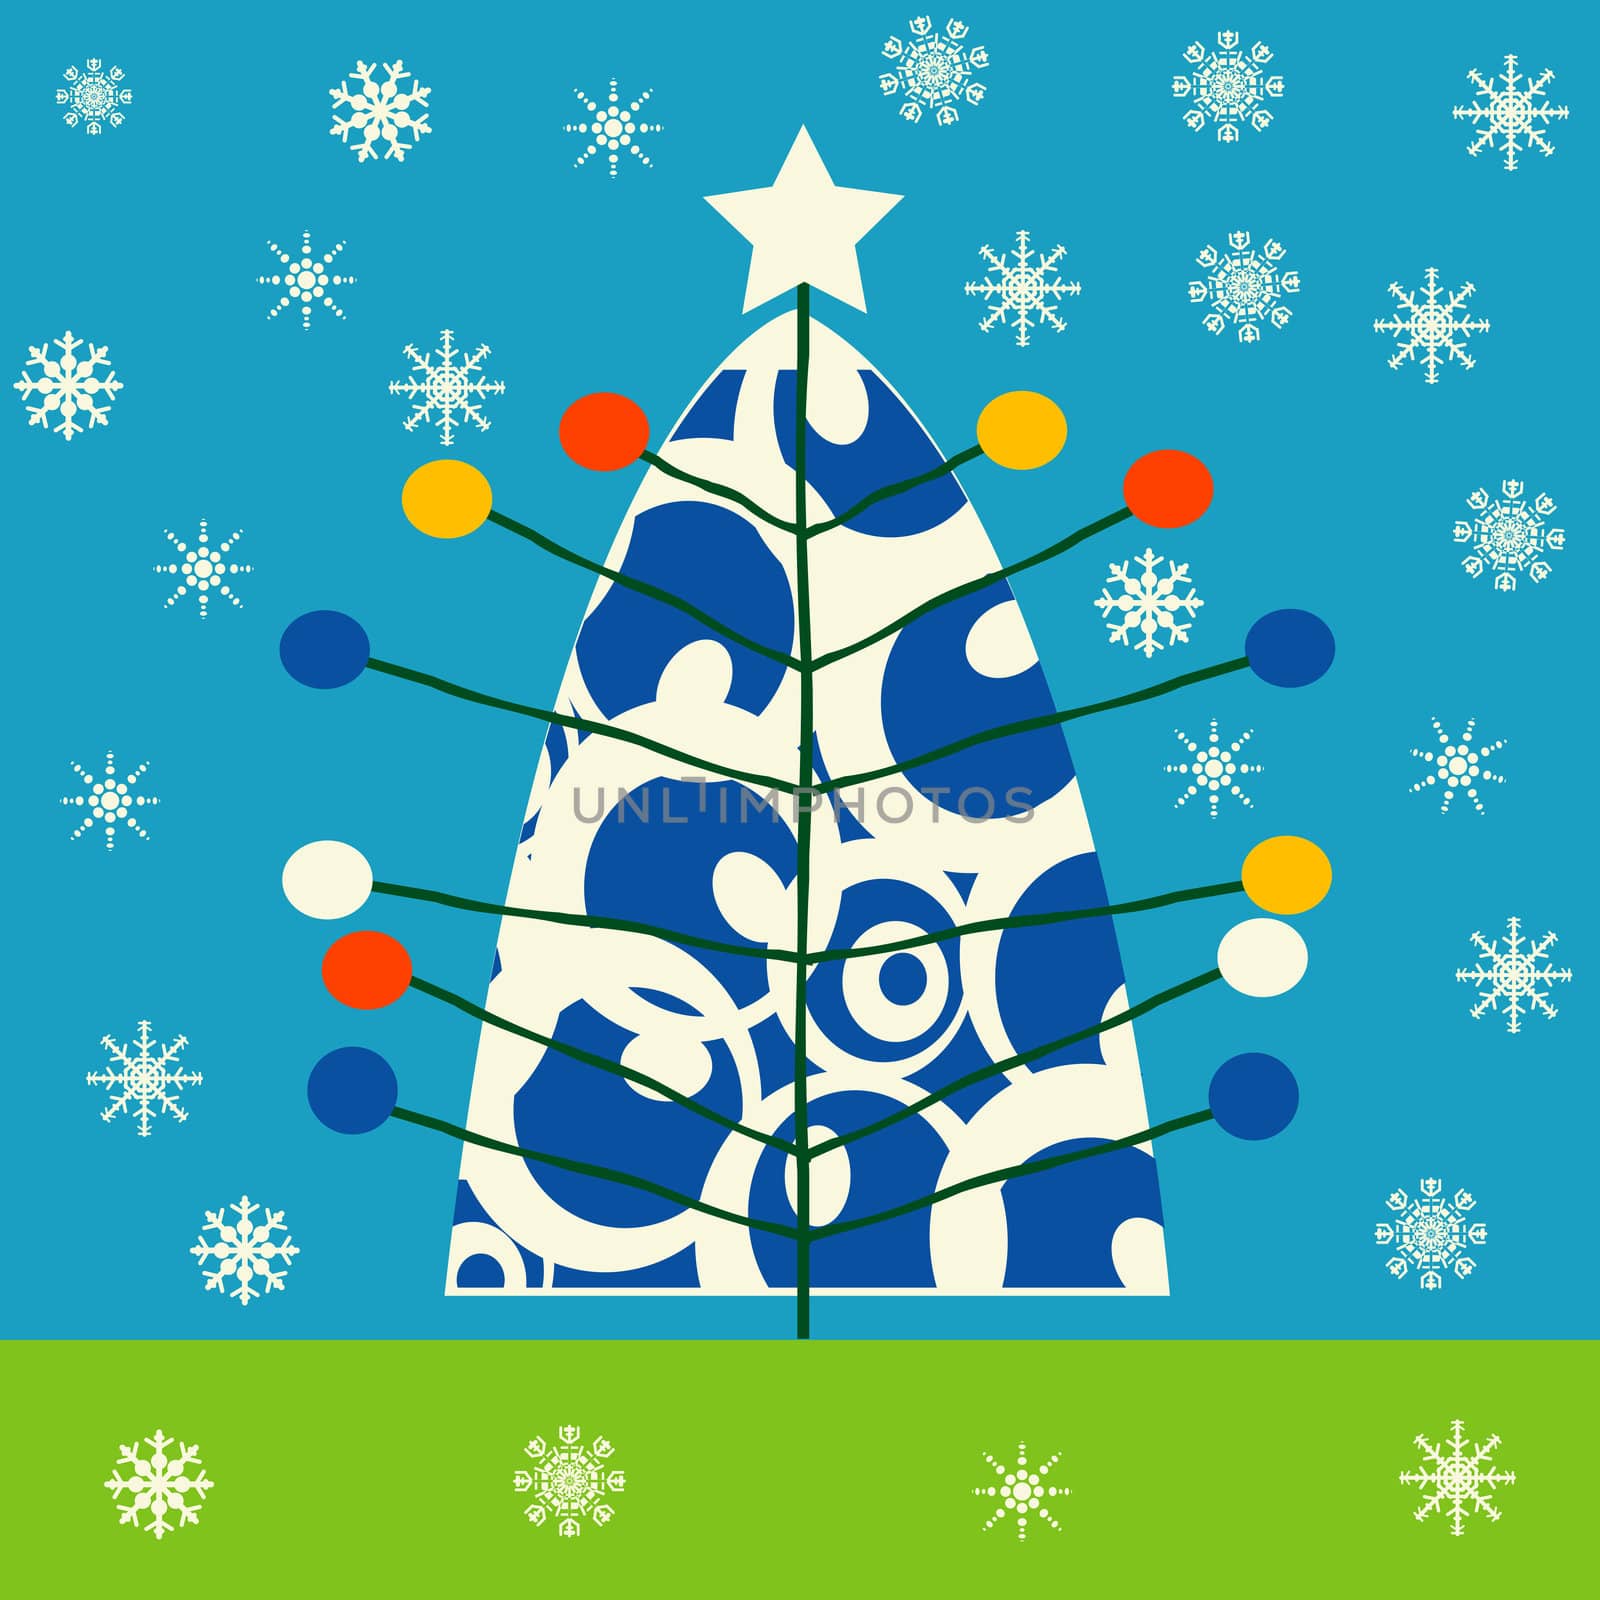 Christmas tree by Lirch